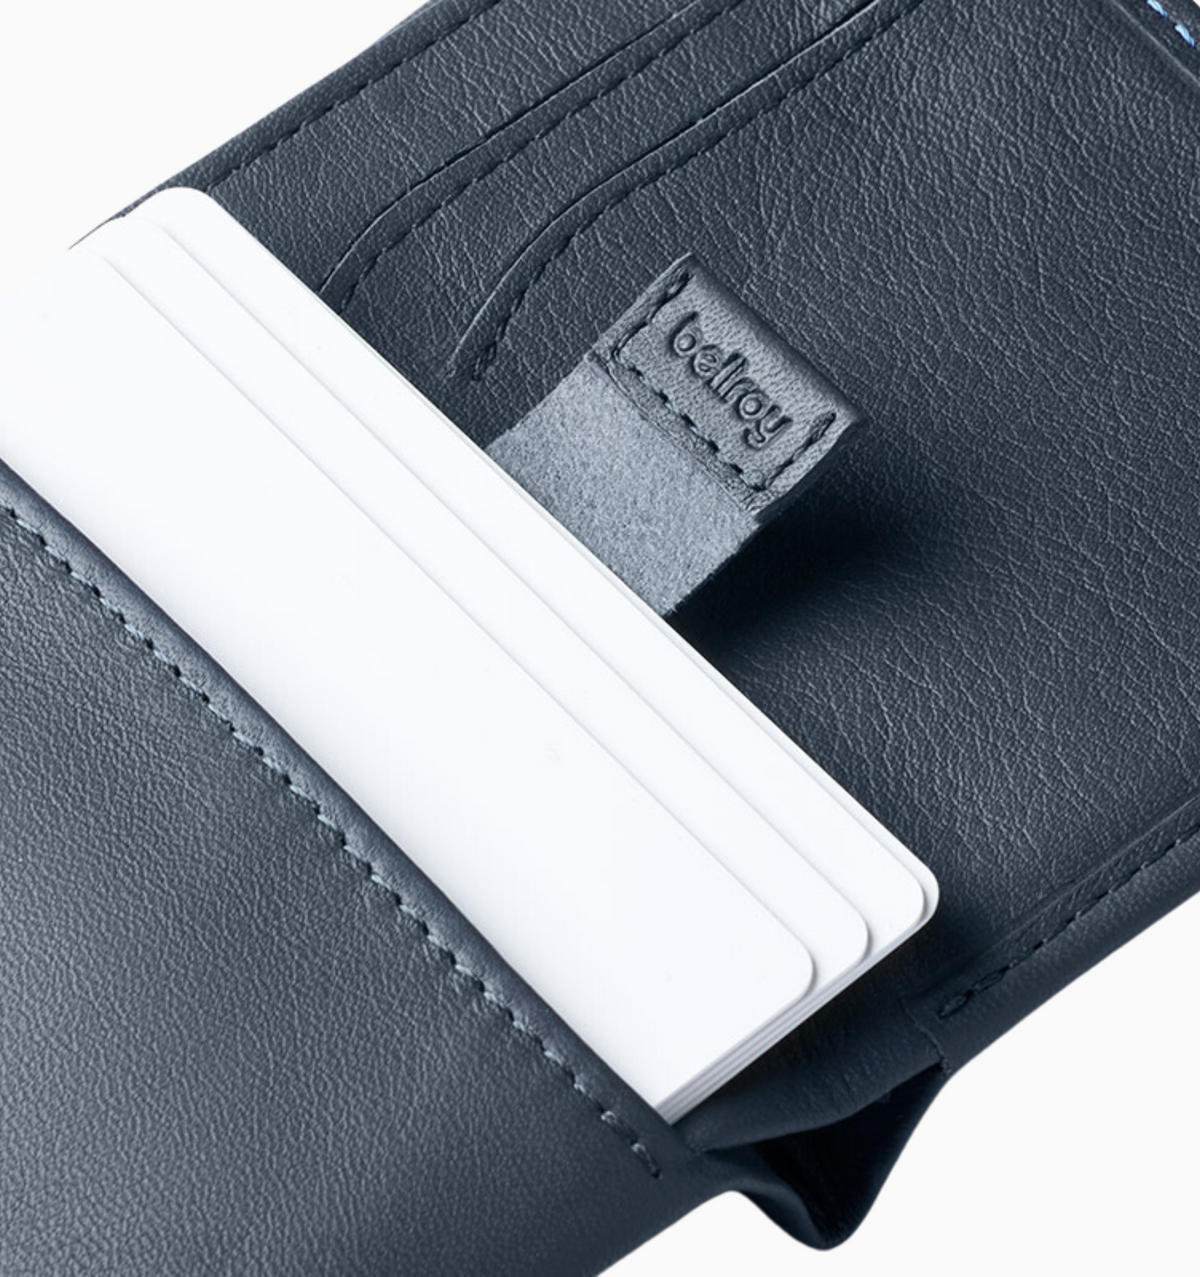 Bellroy Note Sleeve Wallet - Basalt